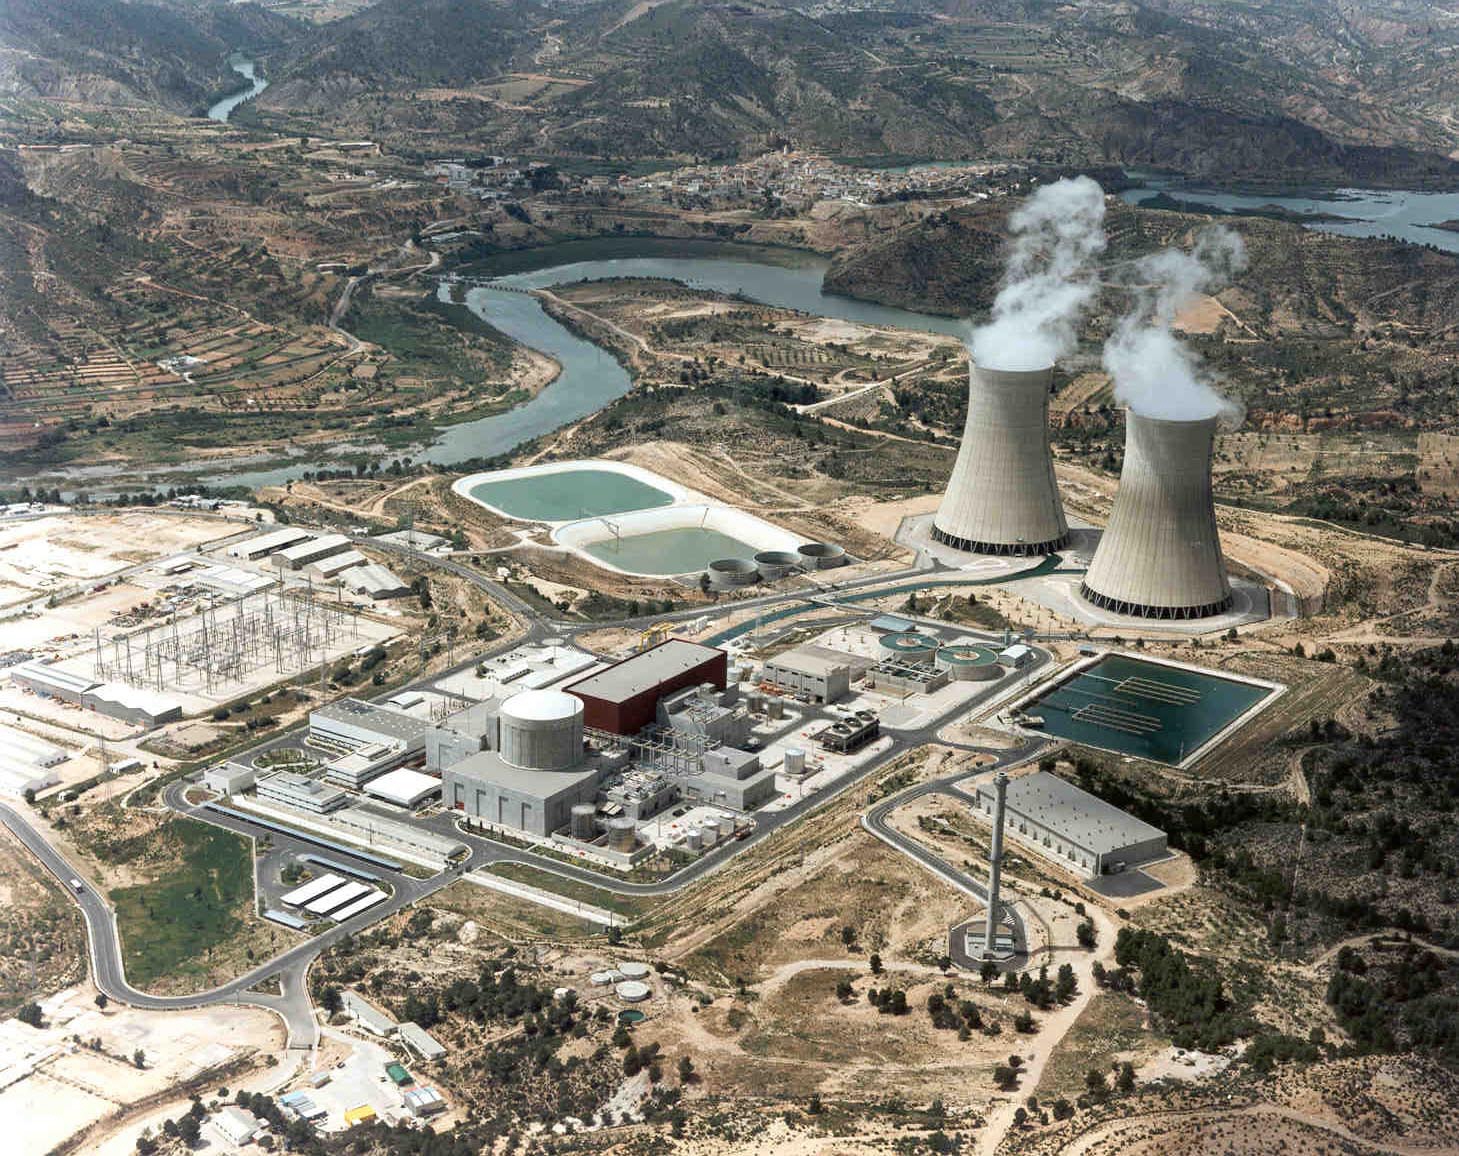 La central nuclear de Cofrents (Imatge: CSN)